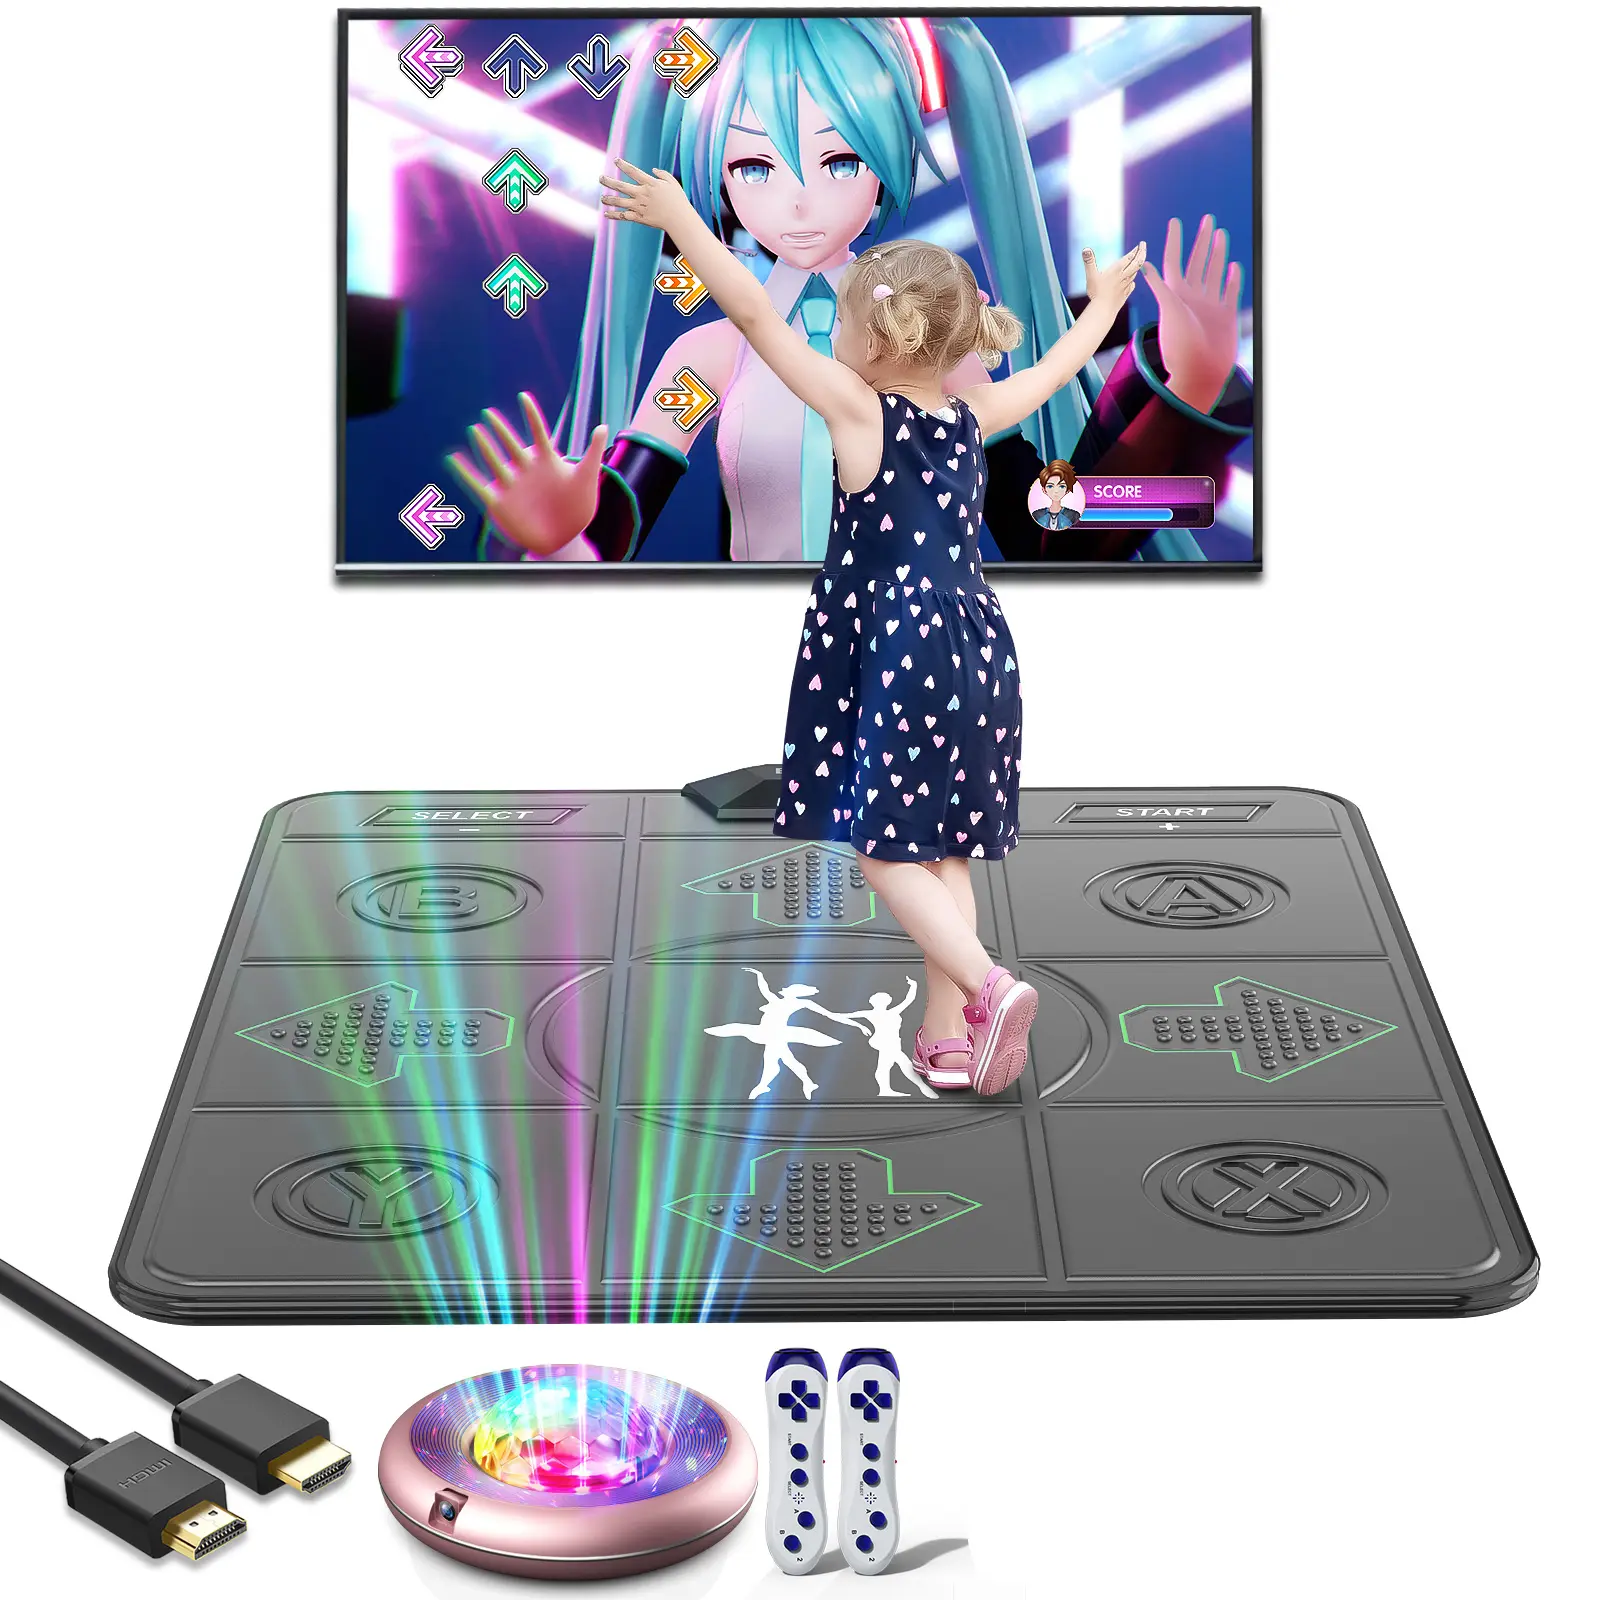 HDMI TV Computer Wireless Dance Mat Game for Adult Kids Boys Girls Dance Floor Portable Musical Blanket Pad